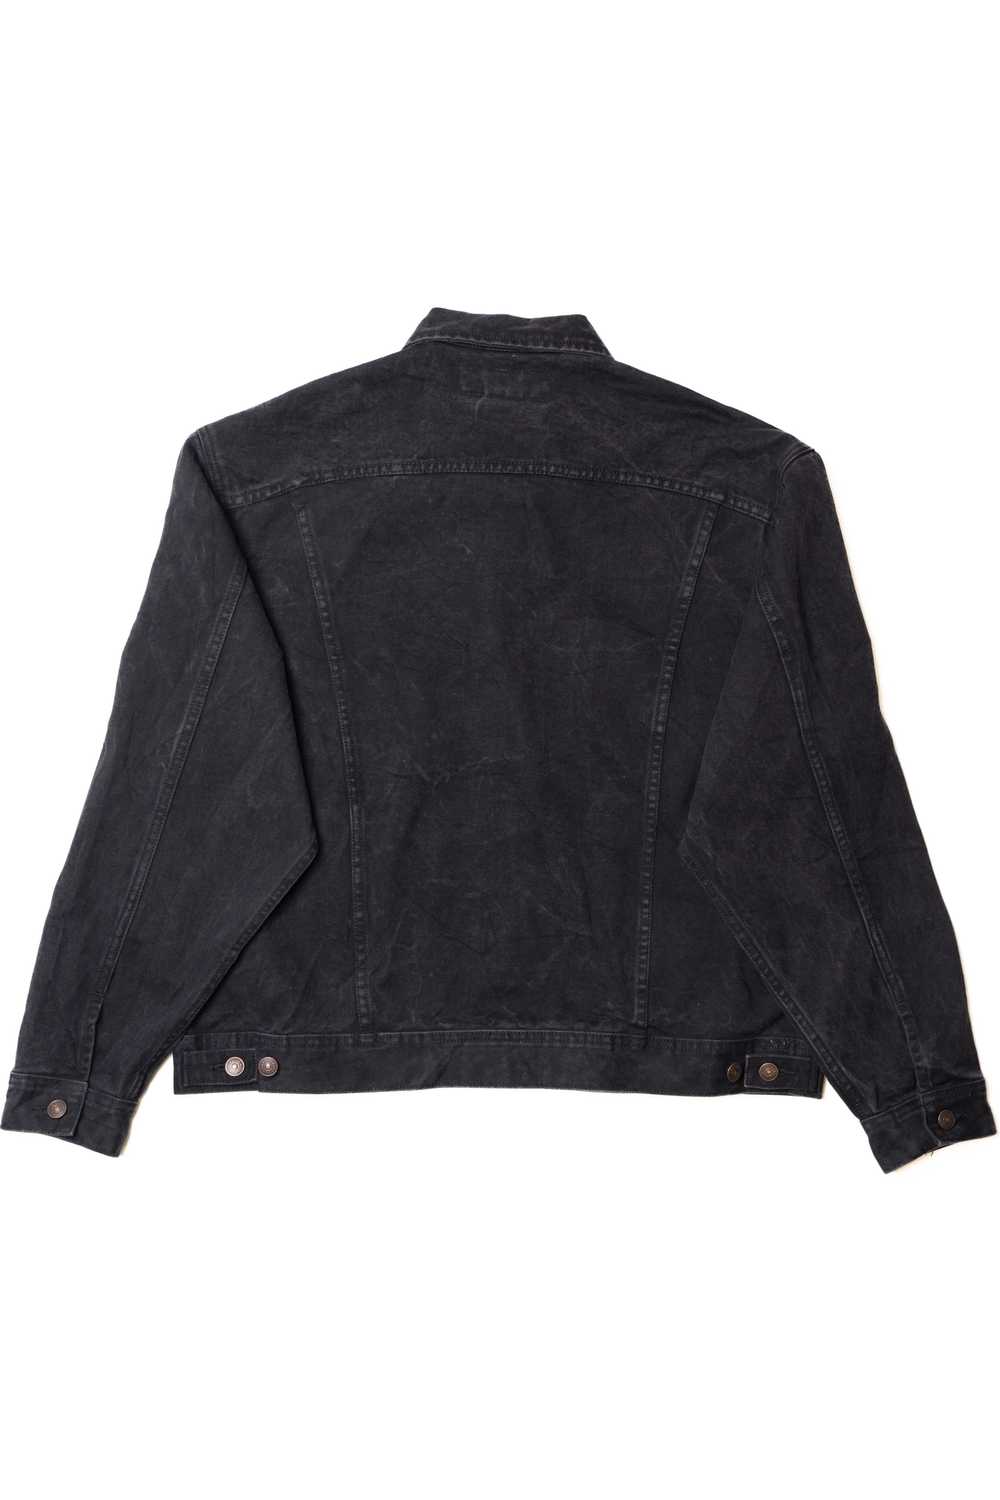 Vintage Lee Black Denim Jacket - image 2